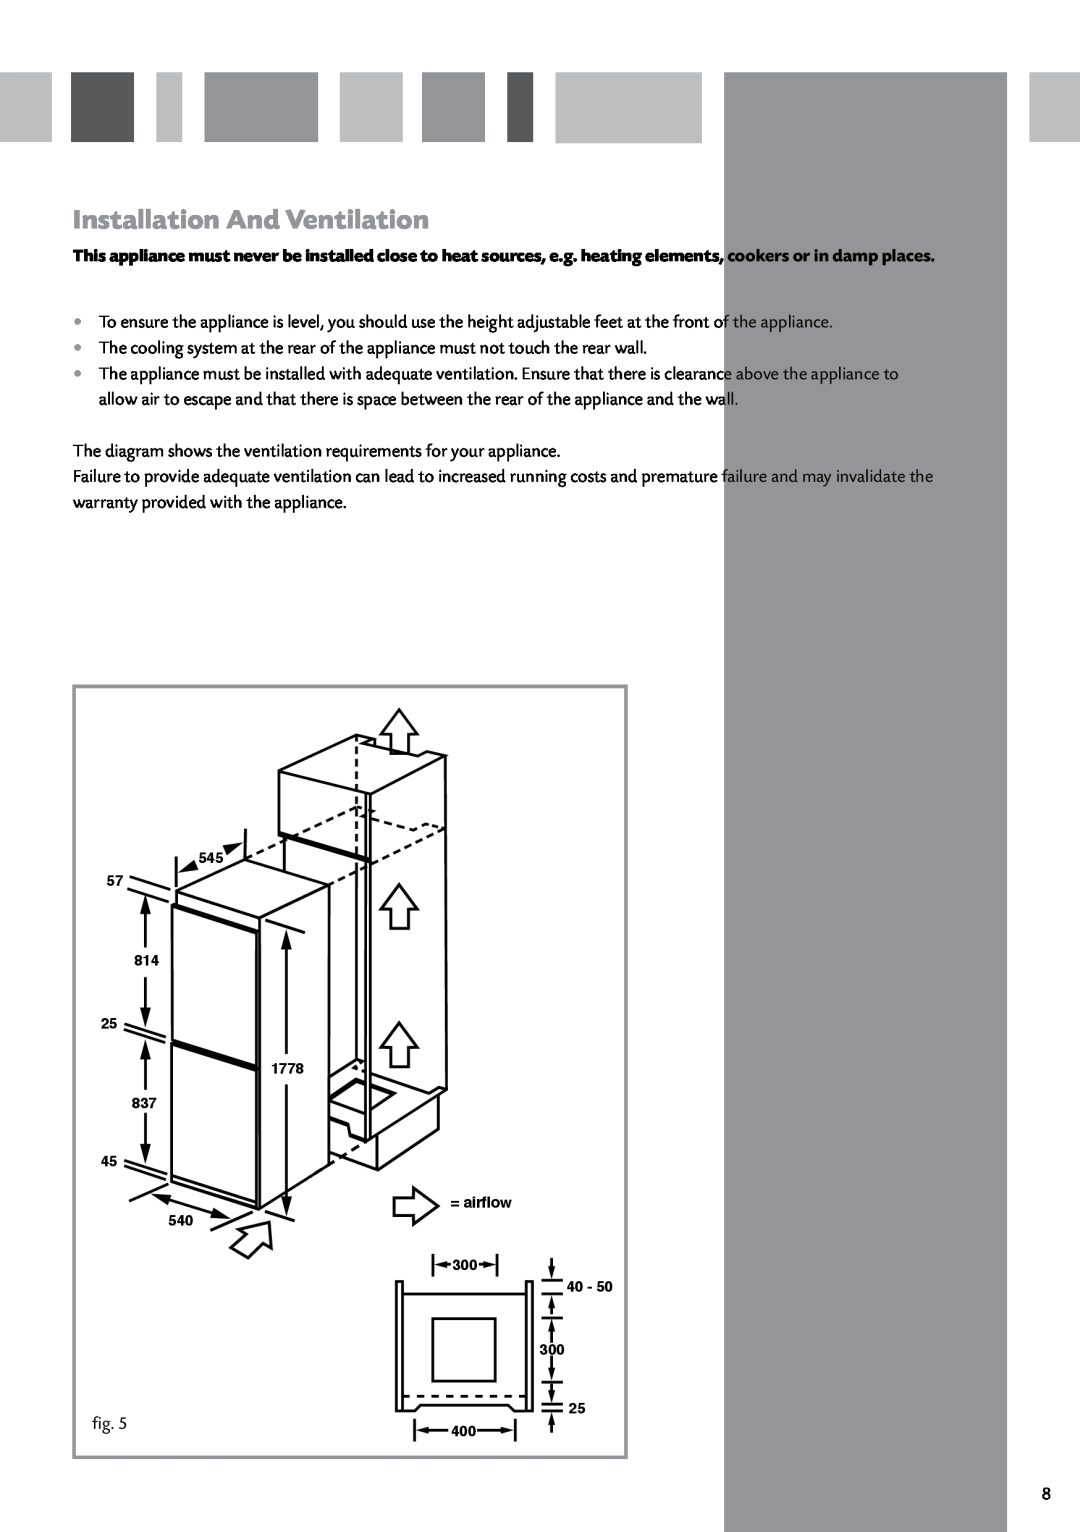 CDA FW950 manual Installation And Ventilation 